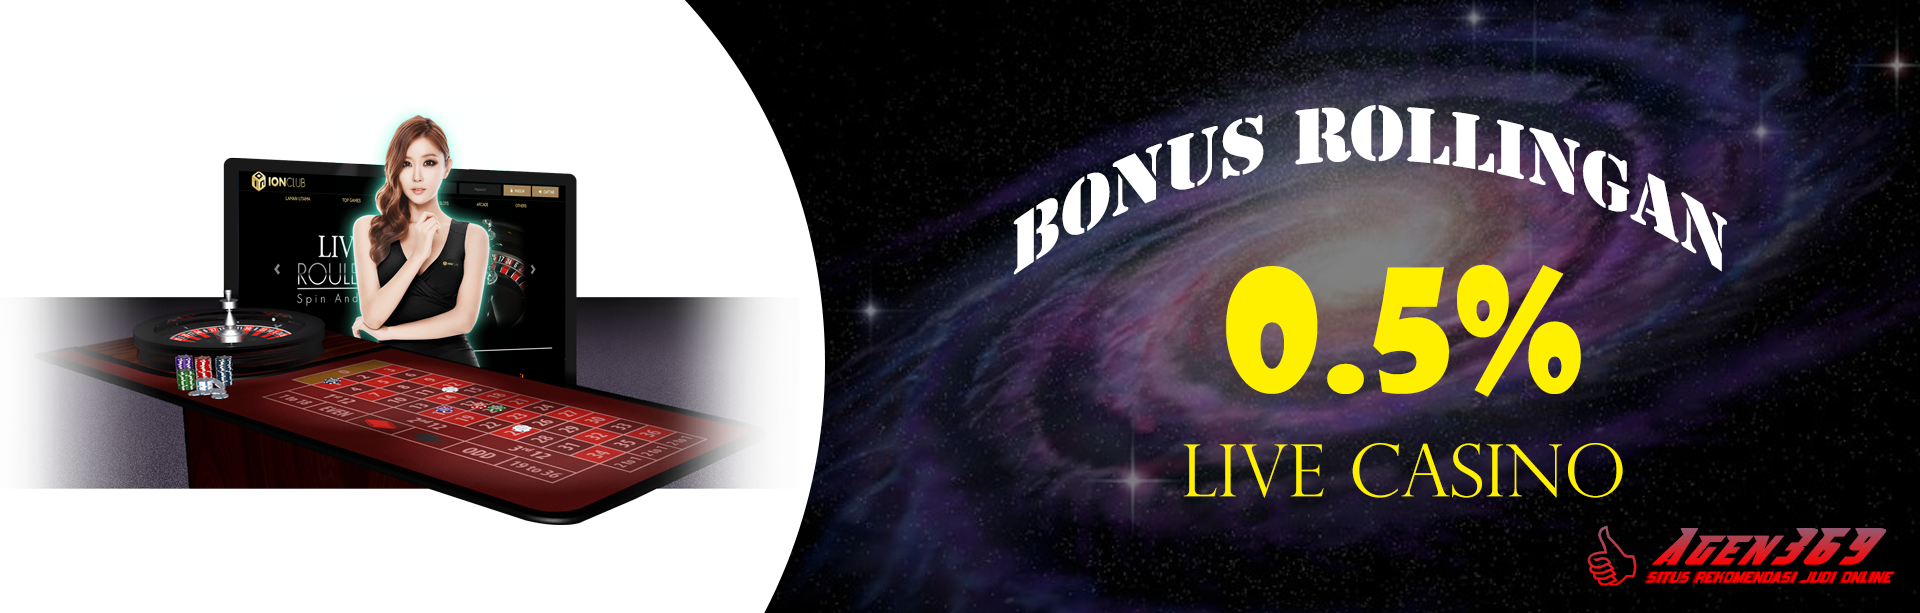 Bonus Rollingan Live Casino 0.5%